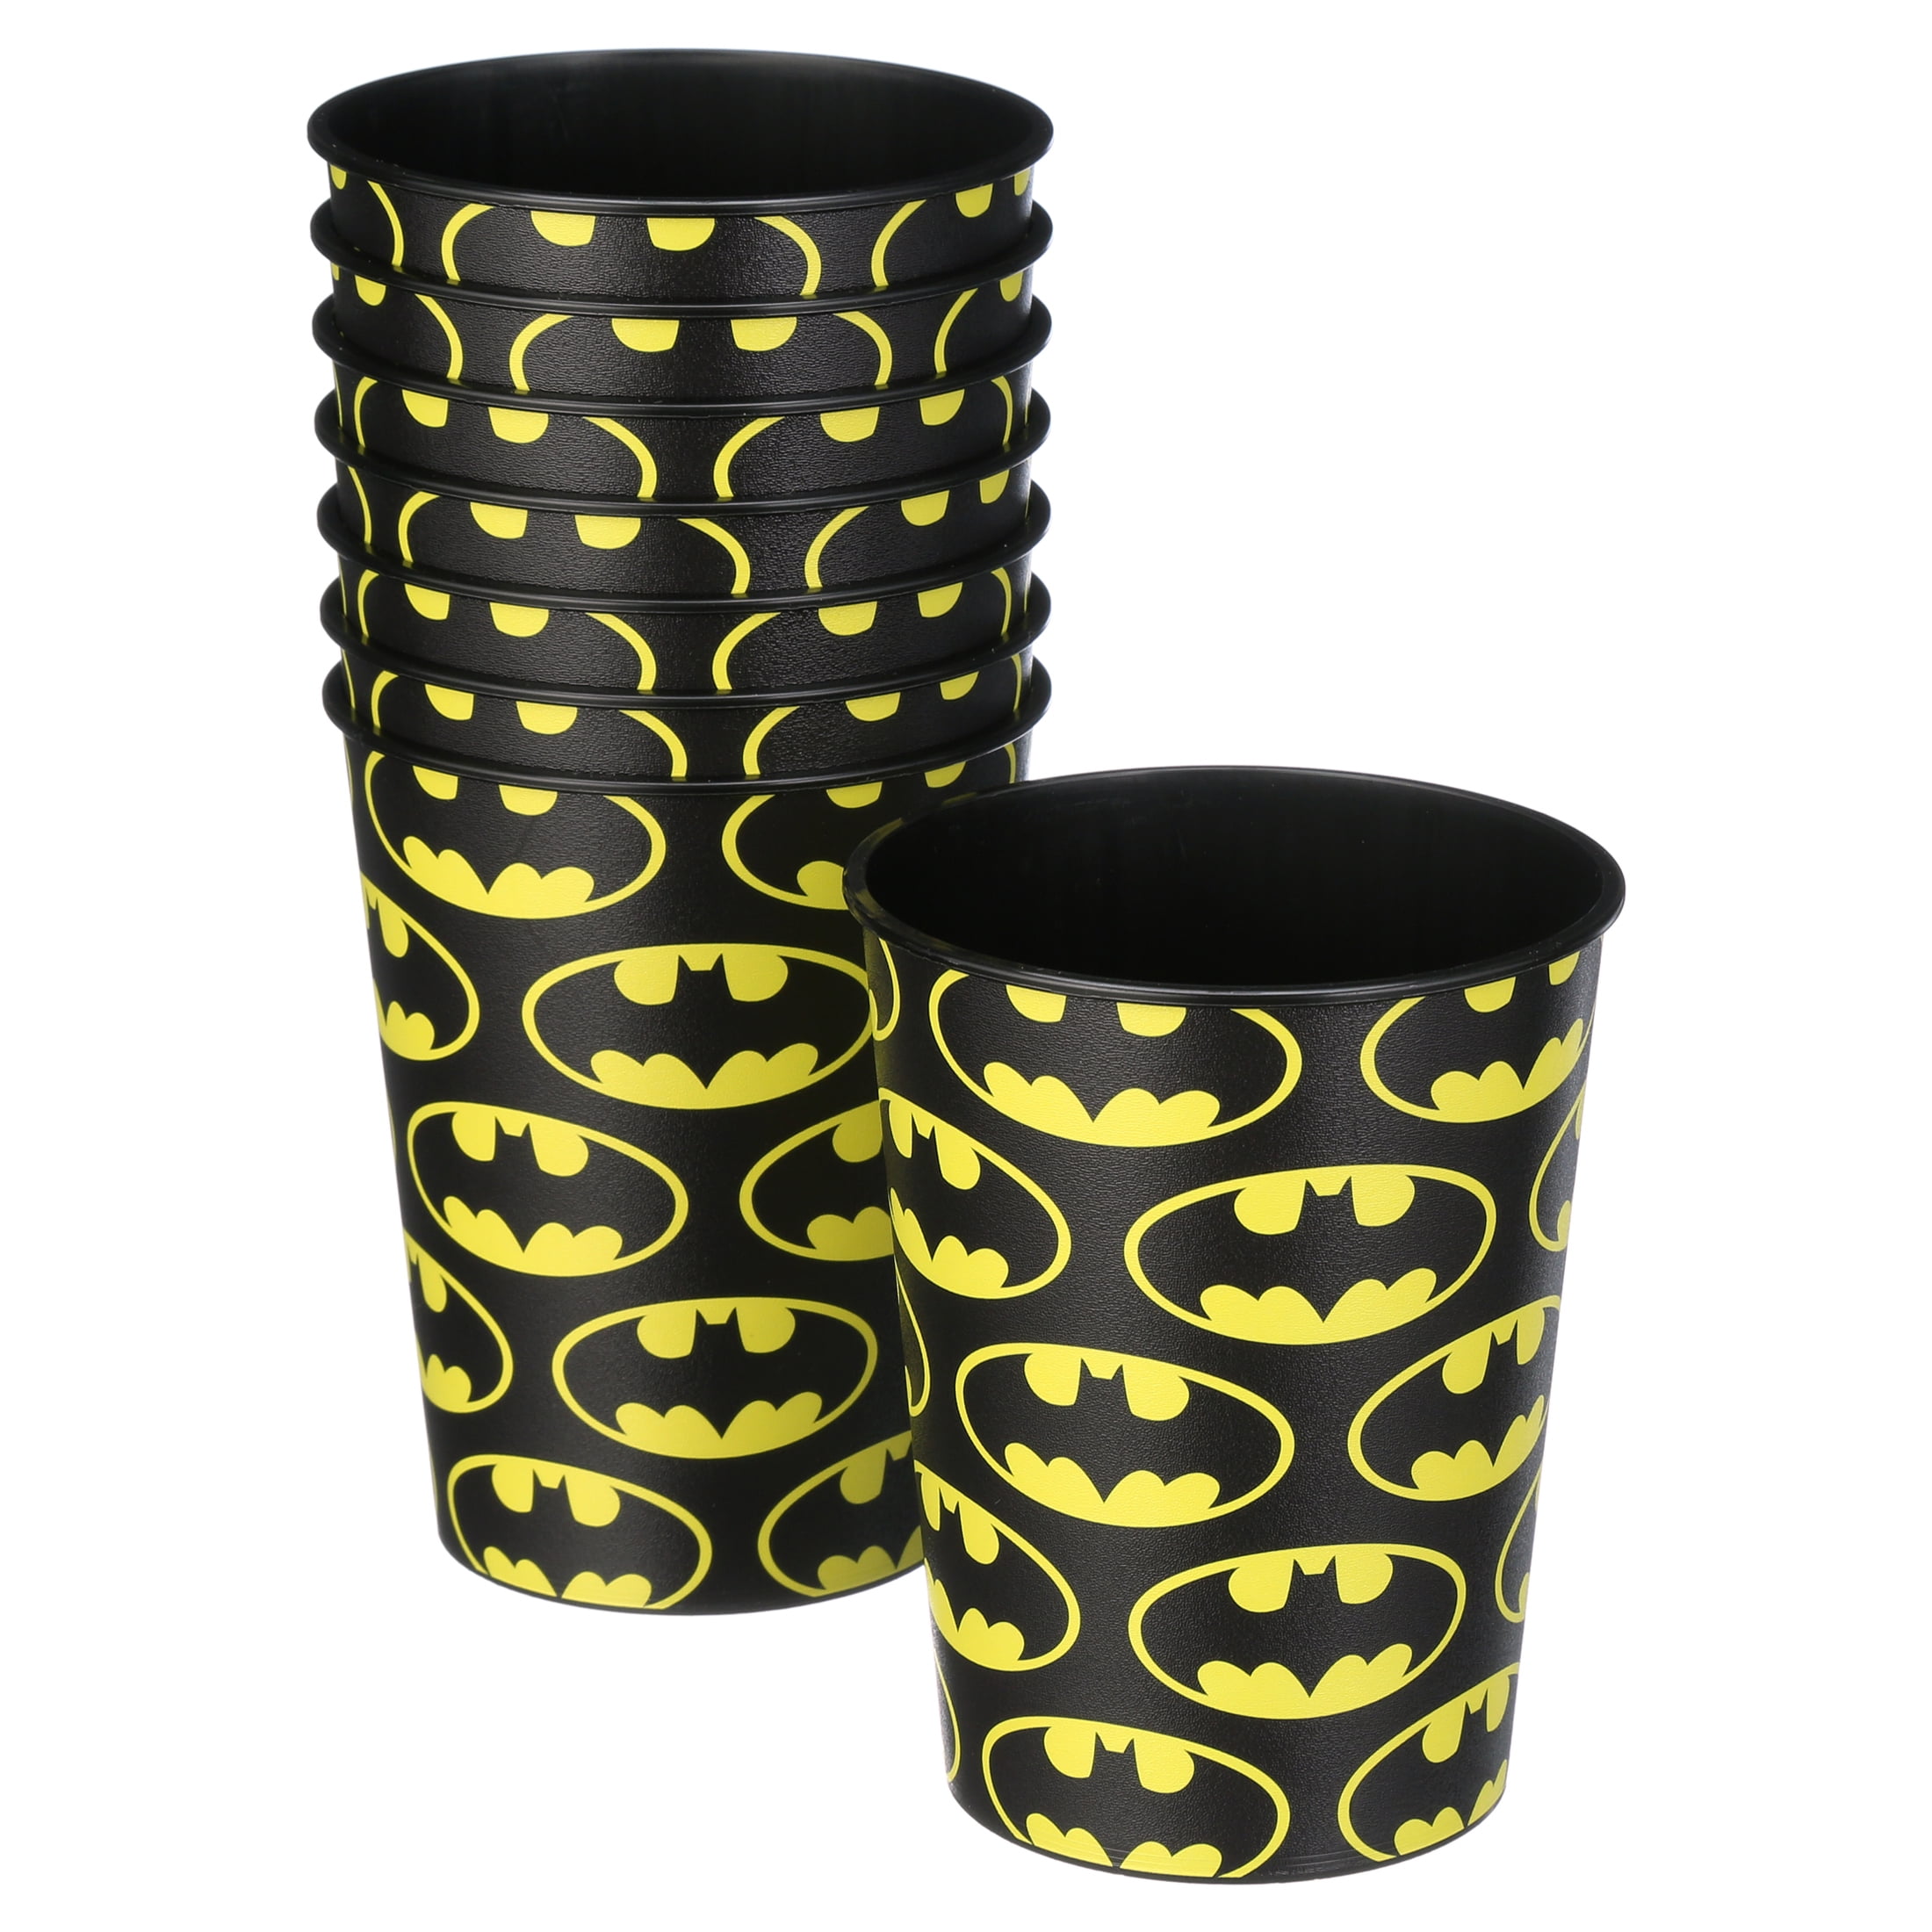 American Greetings Batman 16oz Plastic Party Cups, 8-Count 